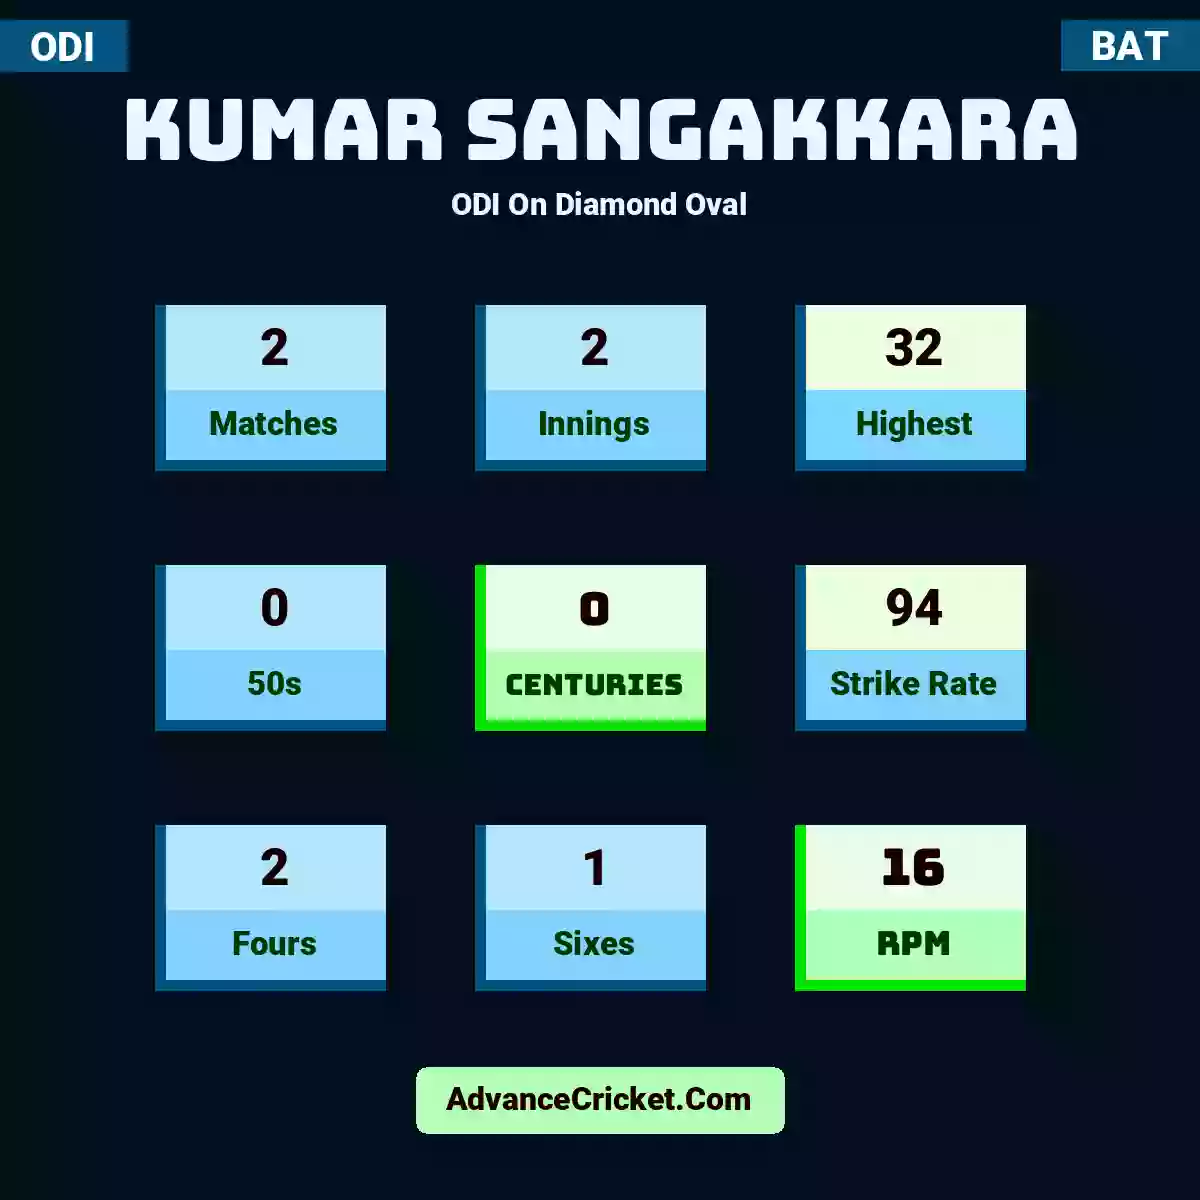 Kumar Sangakkara ODI  On Diamond Oval, Kumar Sangakkara played 2 matches, scored 32 runs as highest, 0 half-centuries, and 0 centuries, with a strike rate of 94. K.Sangakkara hit 2 fours and 1 sixes, with an RPM of 16.